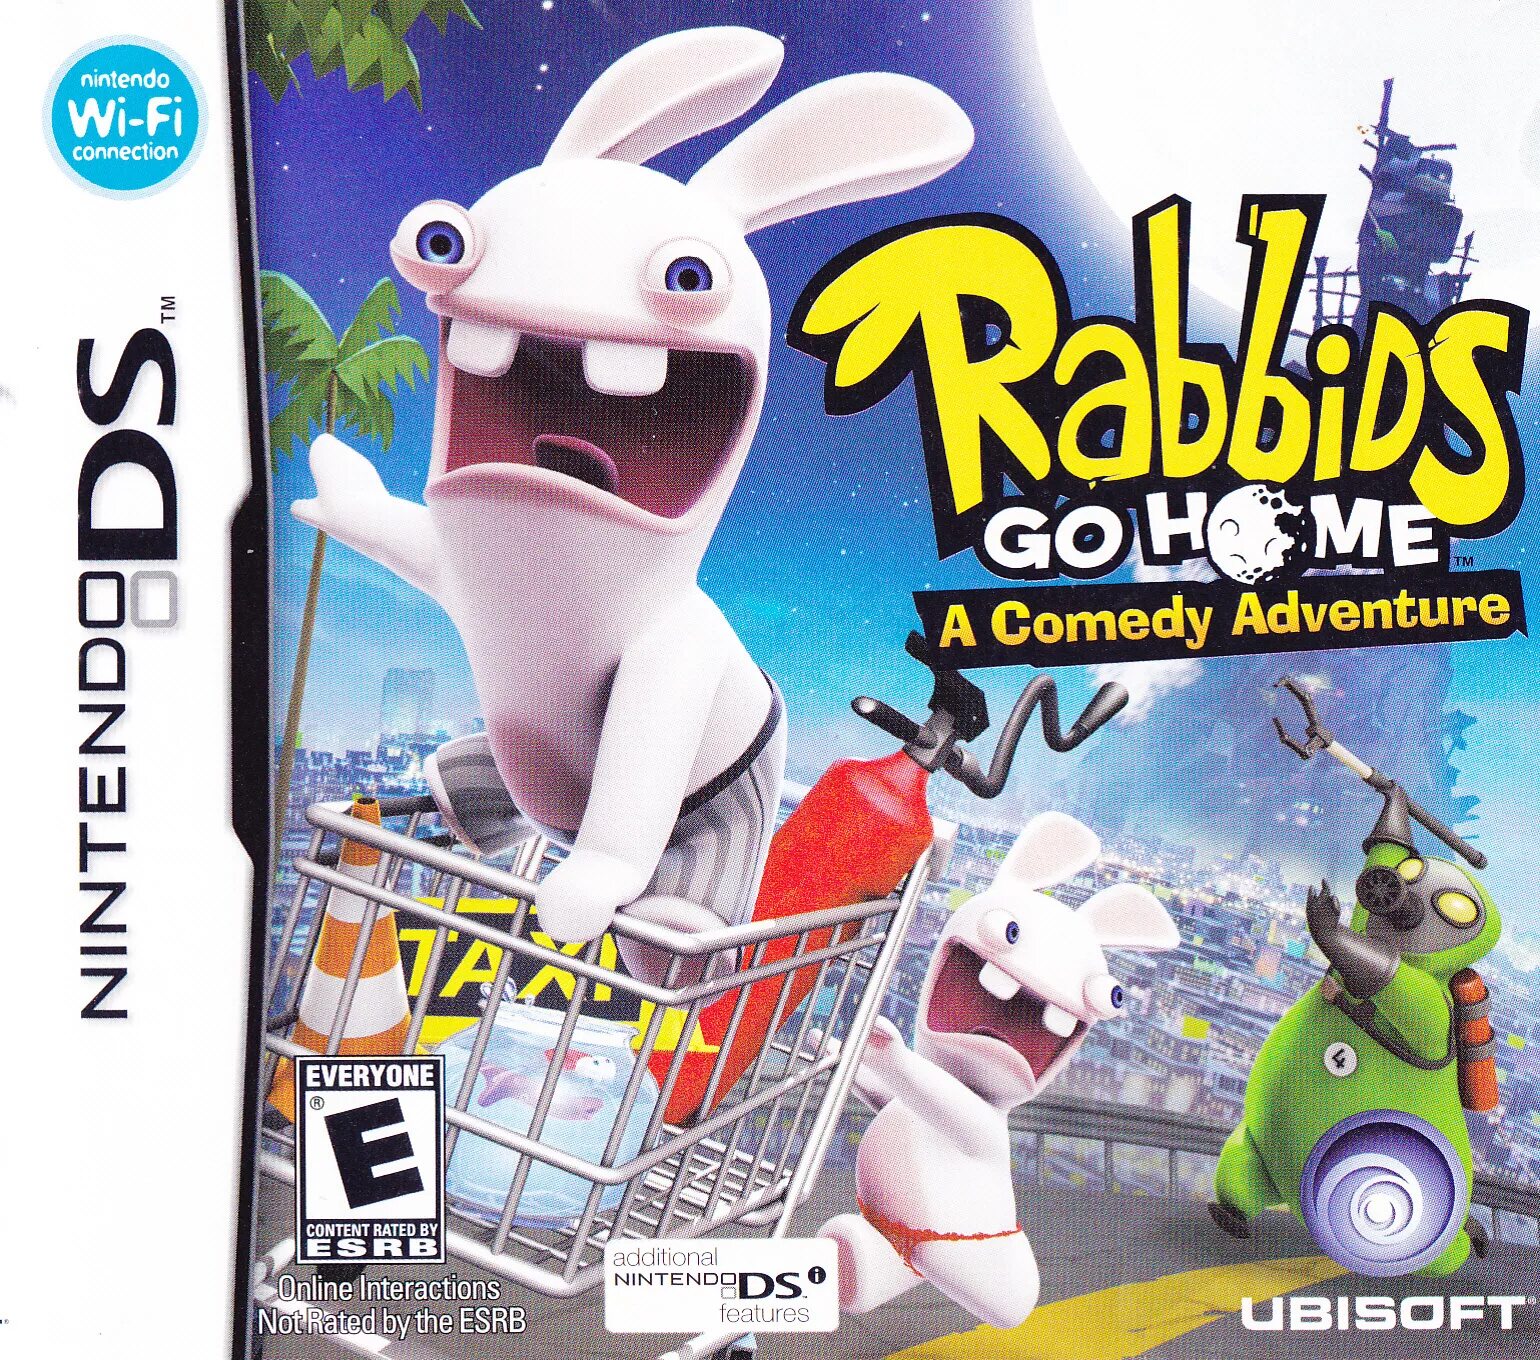 Rabbids Invasion (Xbox 360). Raving Rabbids go Home. Raving Rabbids DS. Rabbids Land диск. Nintendo home